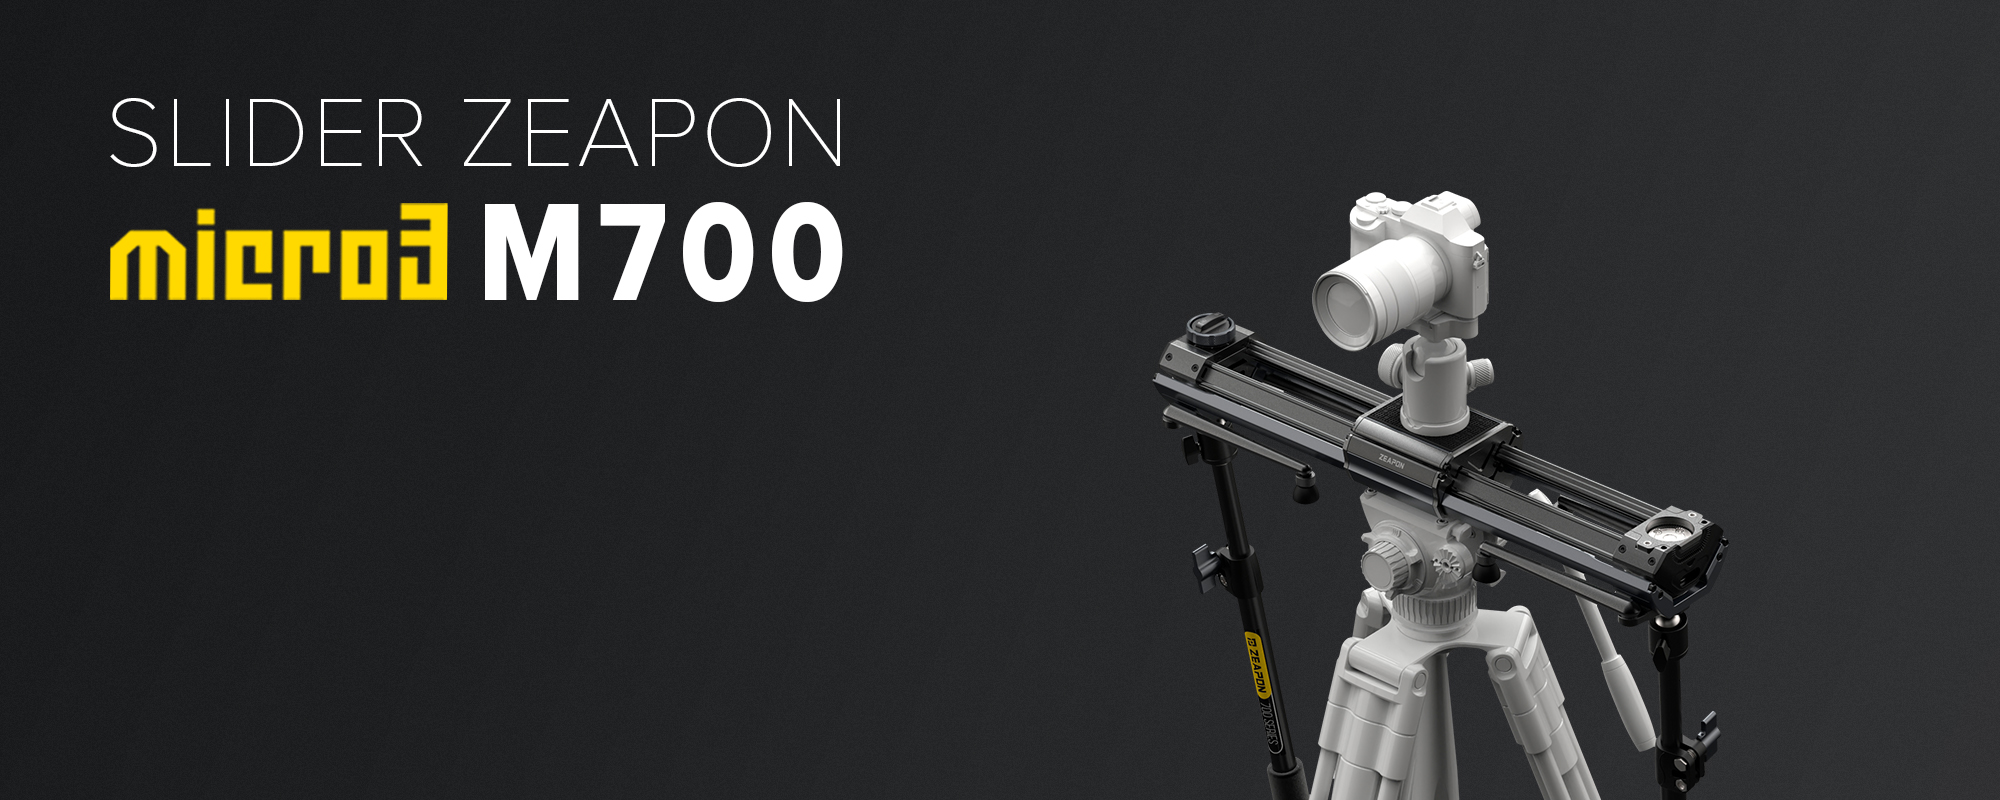 Slider Zeapon Micro 3 M700